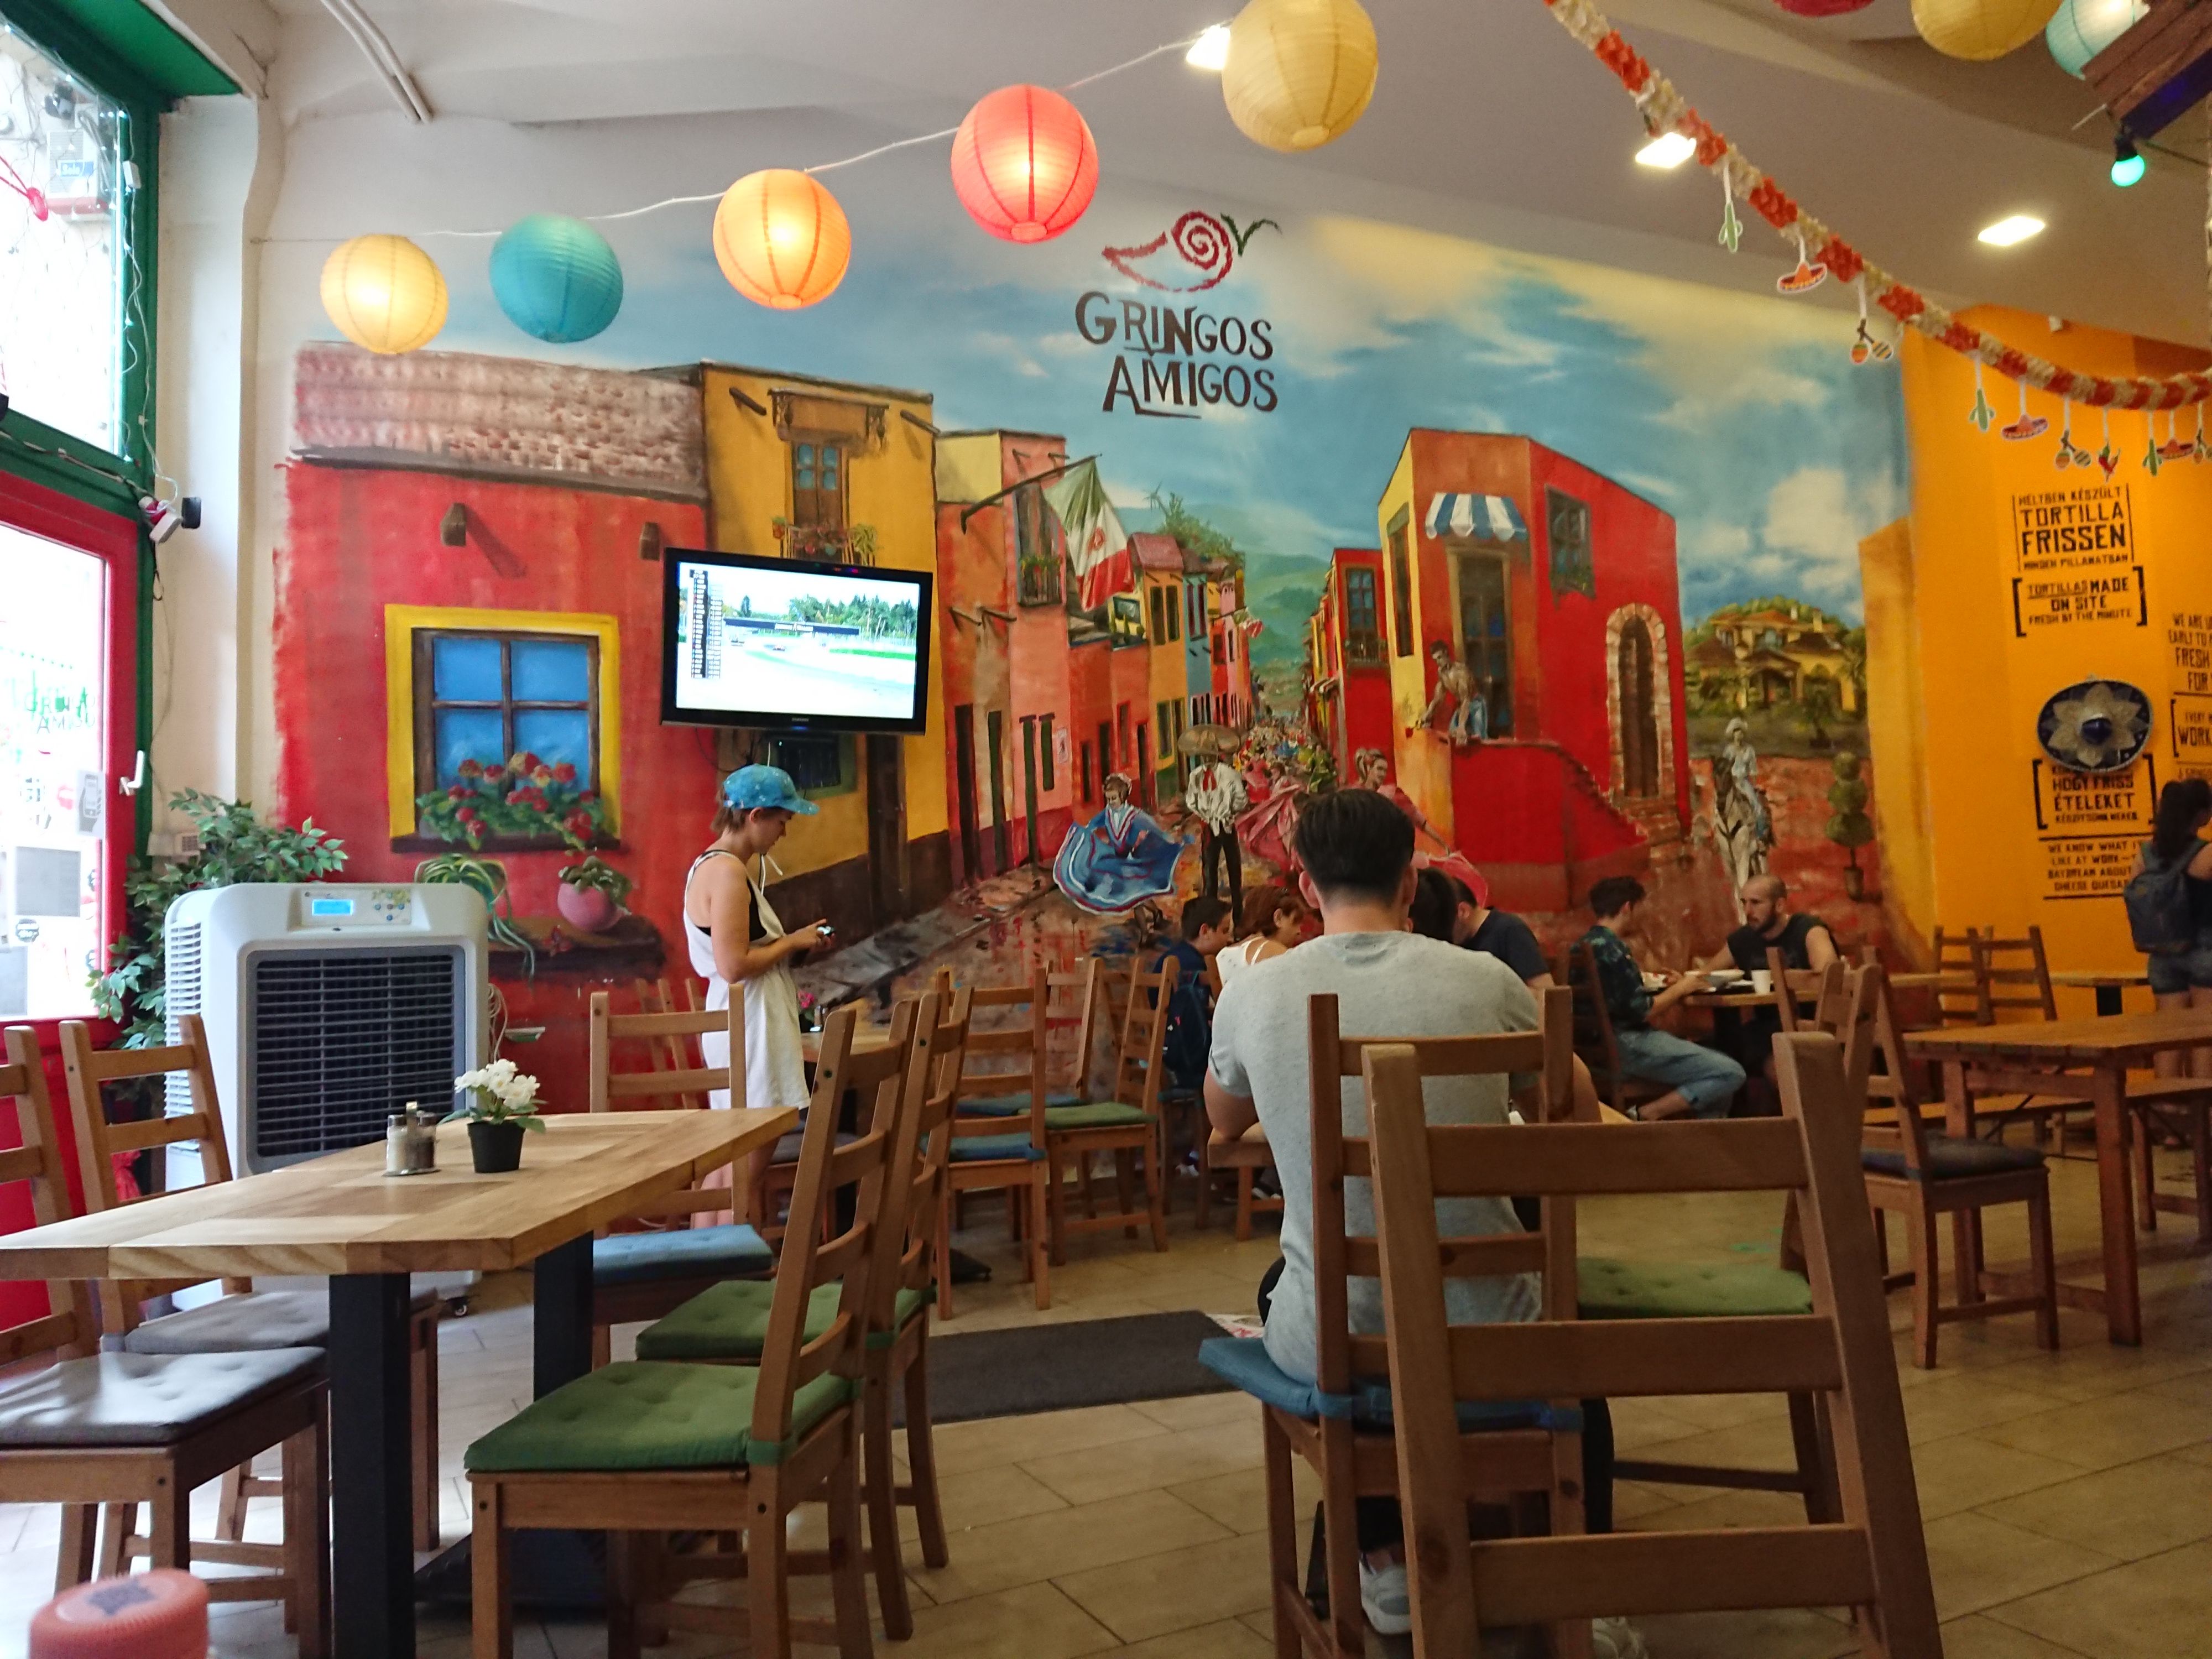 Gringos Amigos Mexican restaurant, Budapest